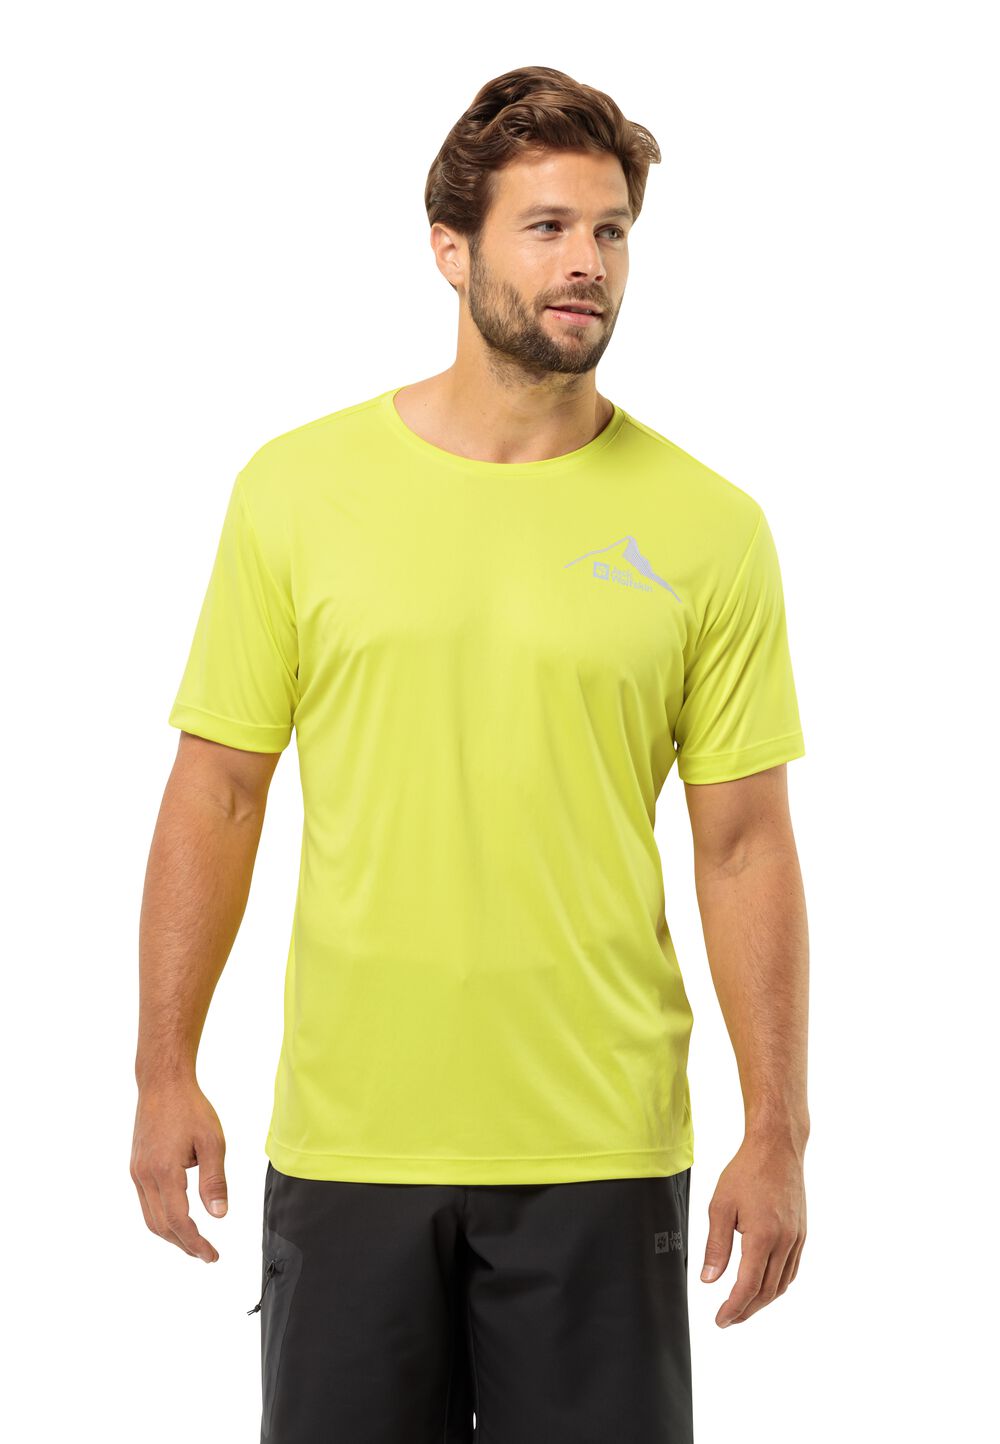 Jack Wolfskin Peak Graphic T-Shirt Men Functioneel shirt Heren S oranje firefly